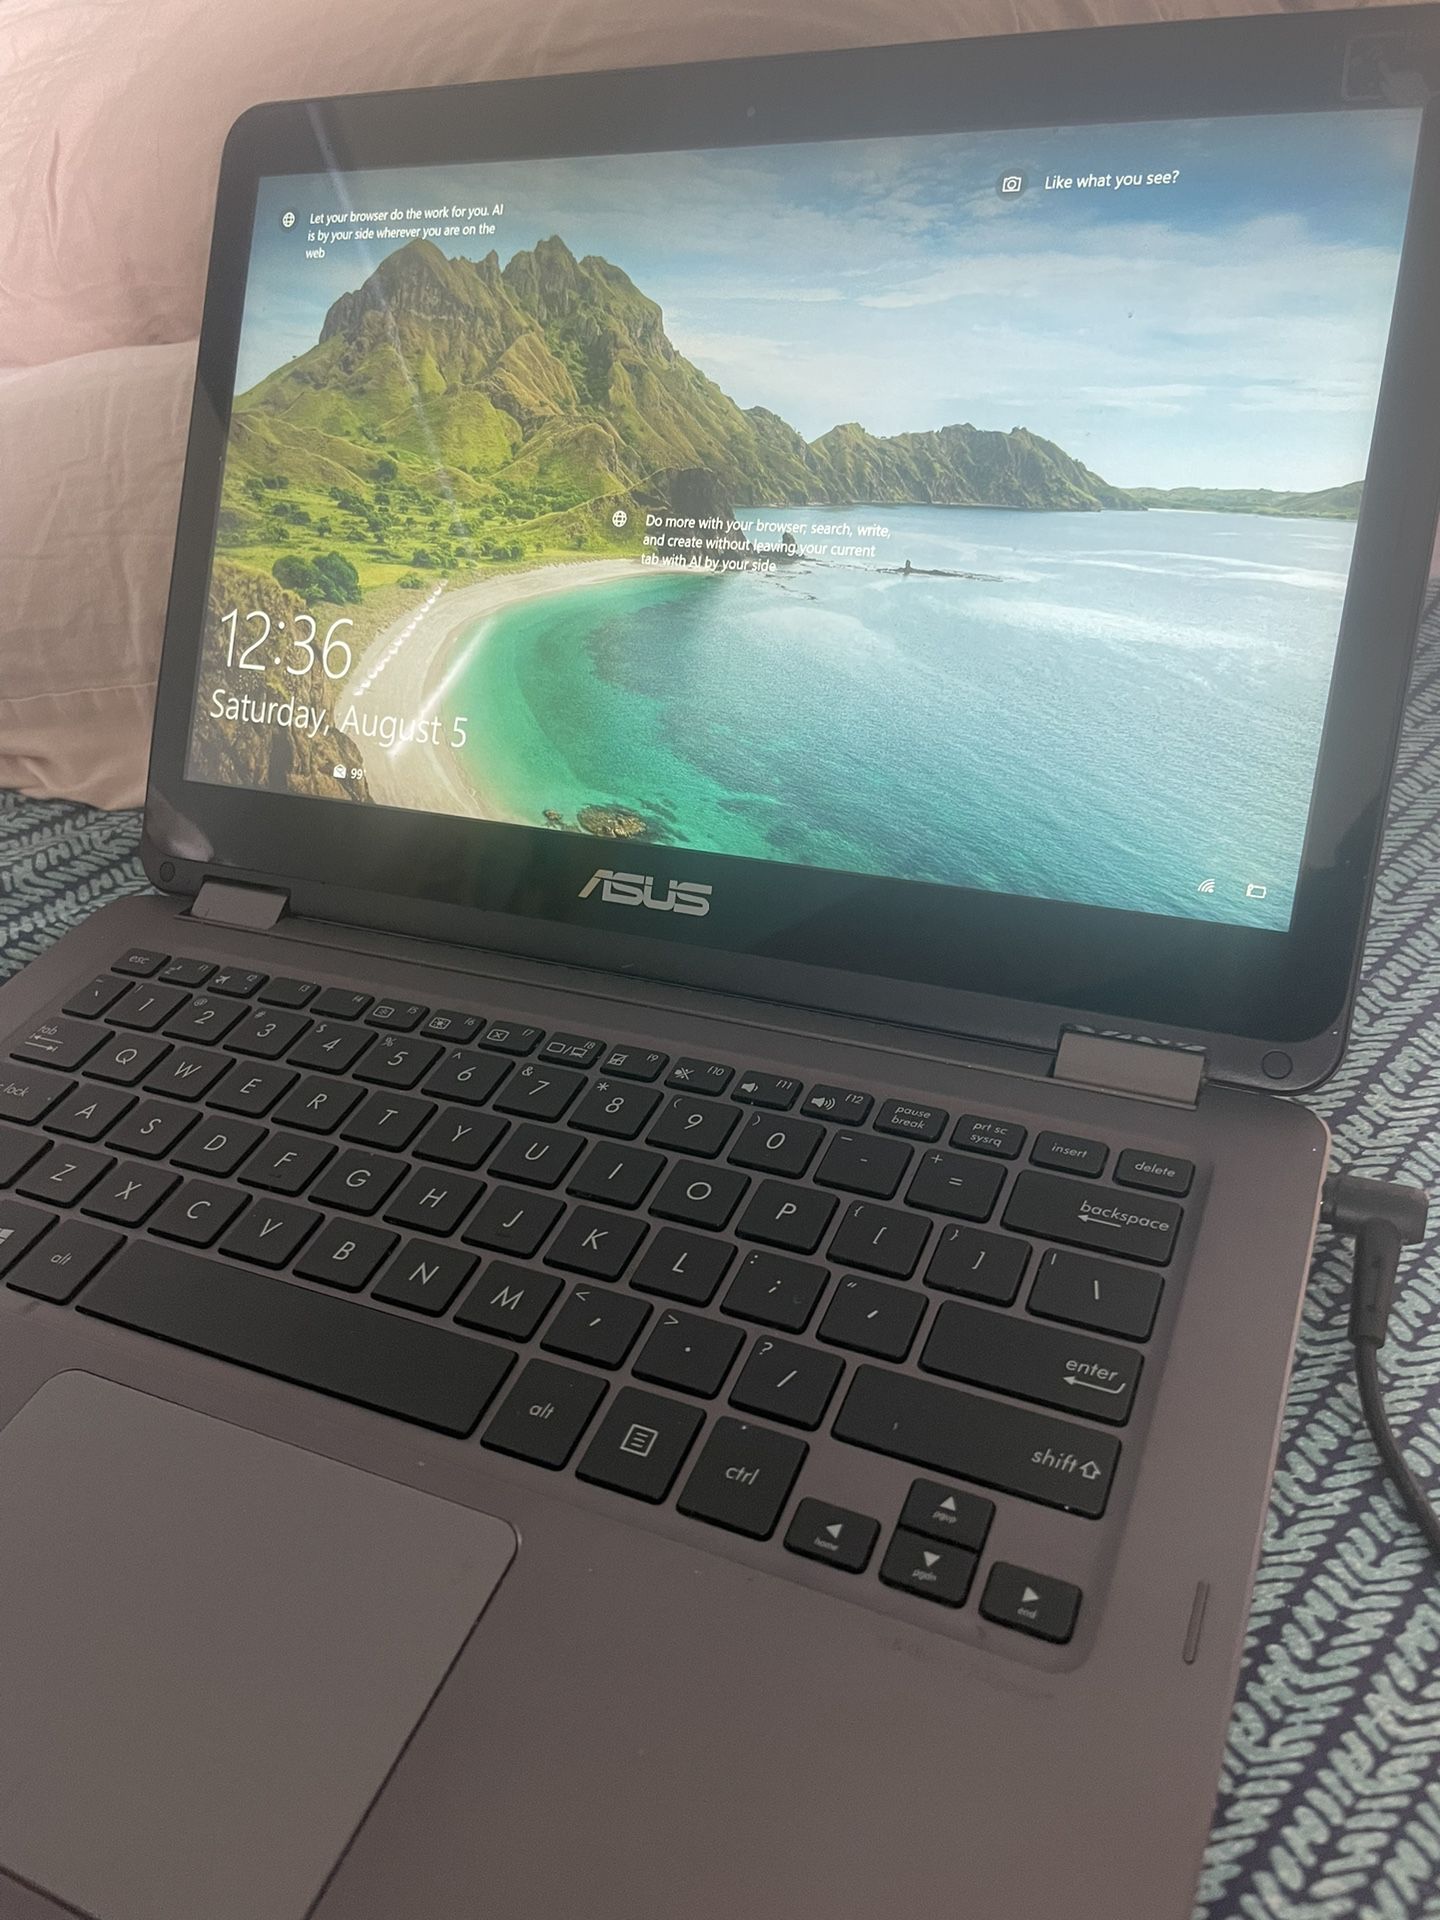 Asus Notebook Laptop Computer